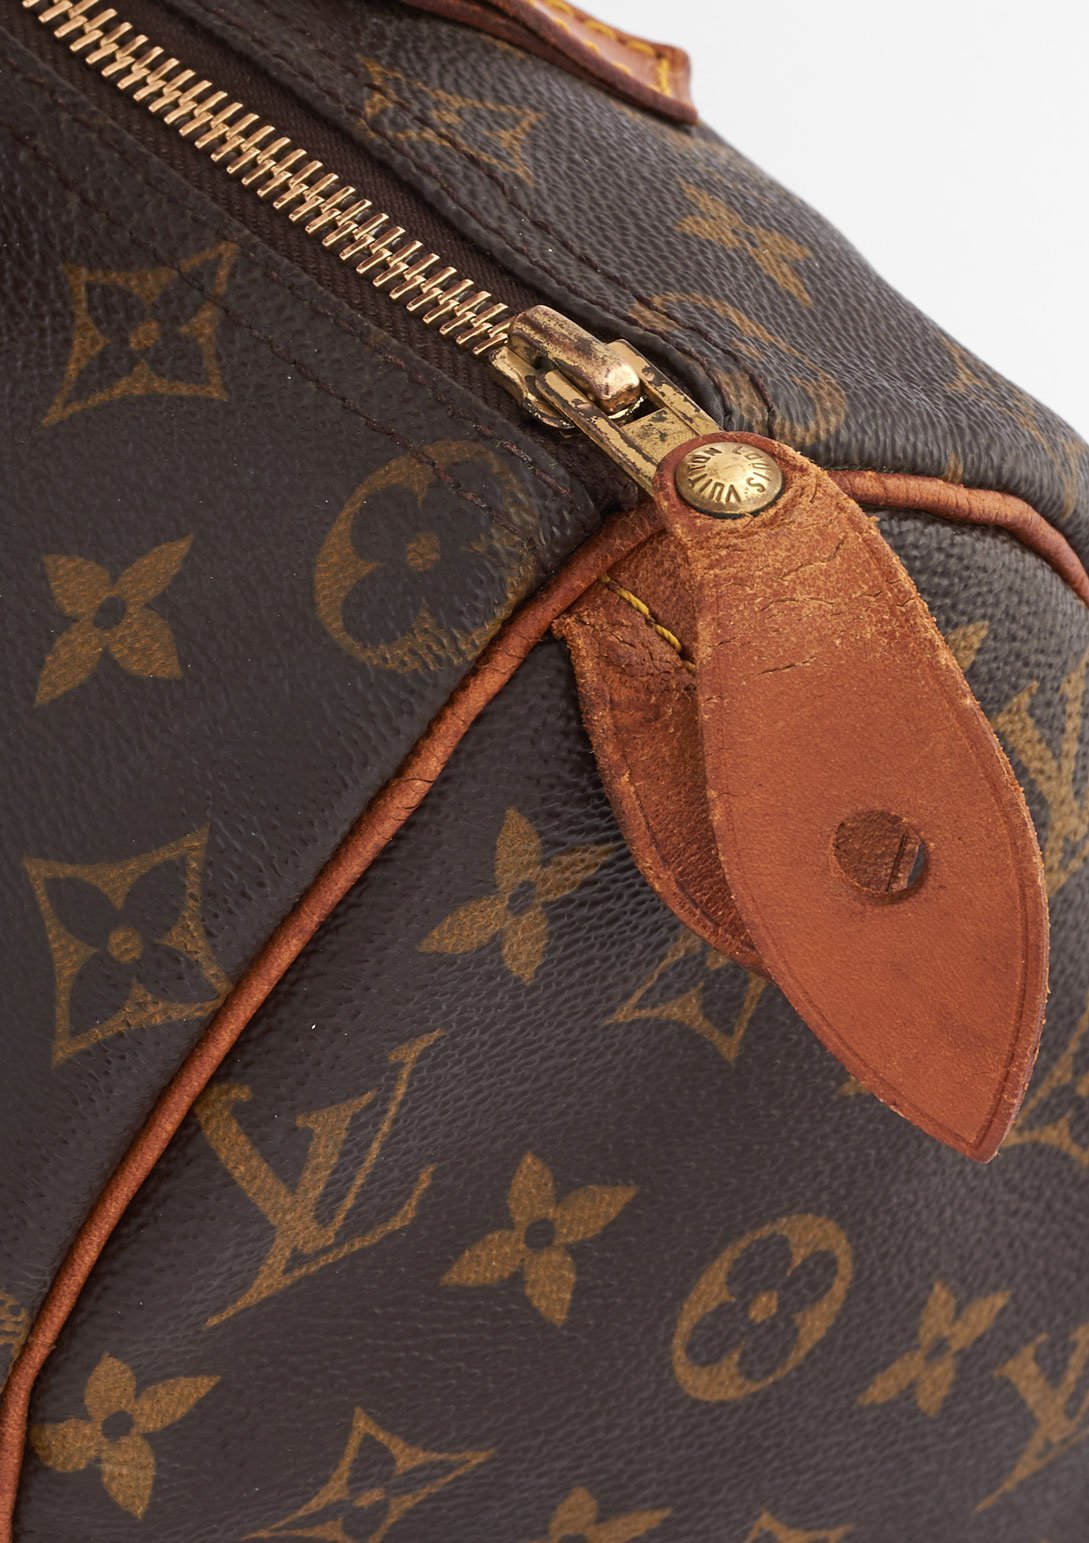 Louis Vuitton Speedy Bag Purse Jan 1989 Date Code Authentic